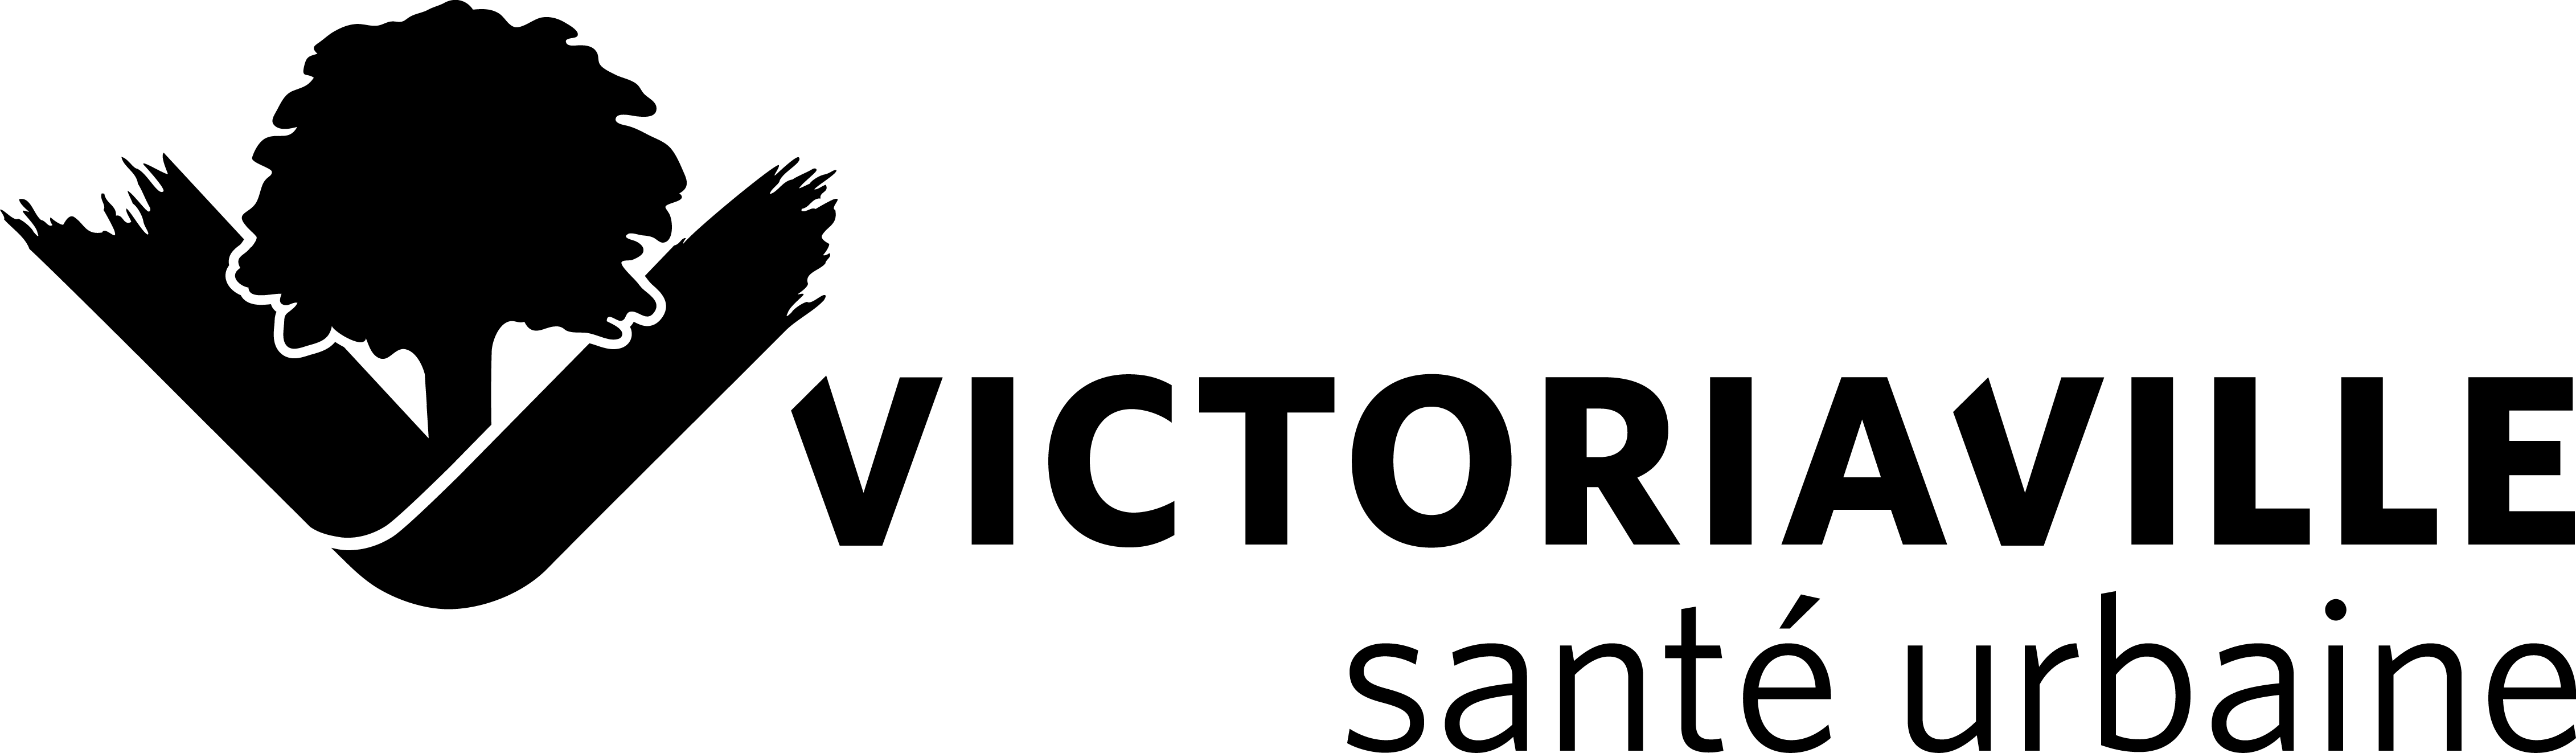 Logo Ville de Victoriaville 2015 horizontal, mono noir.png